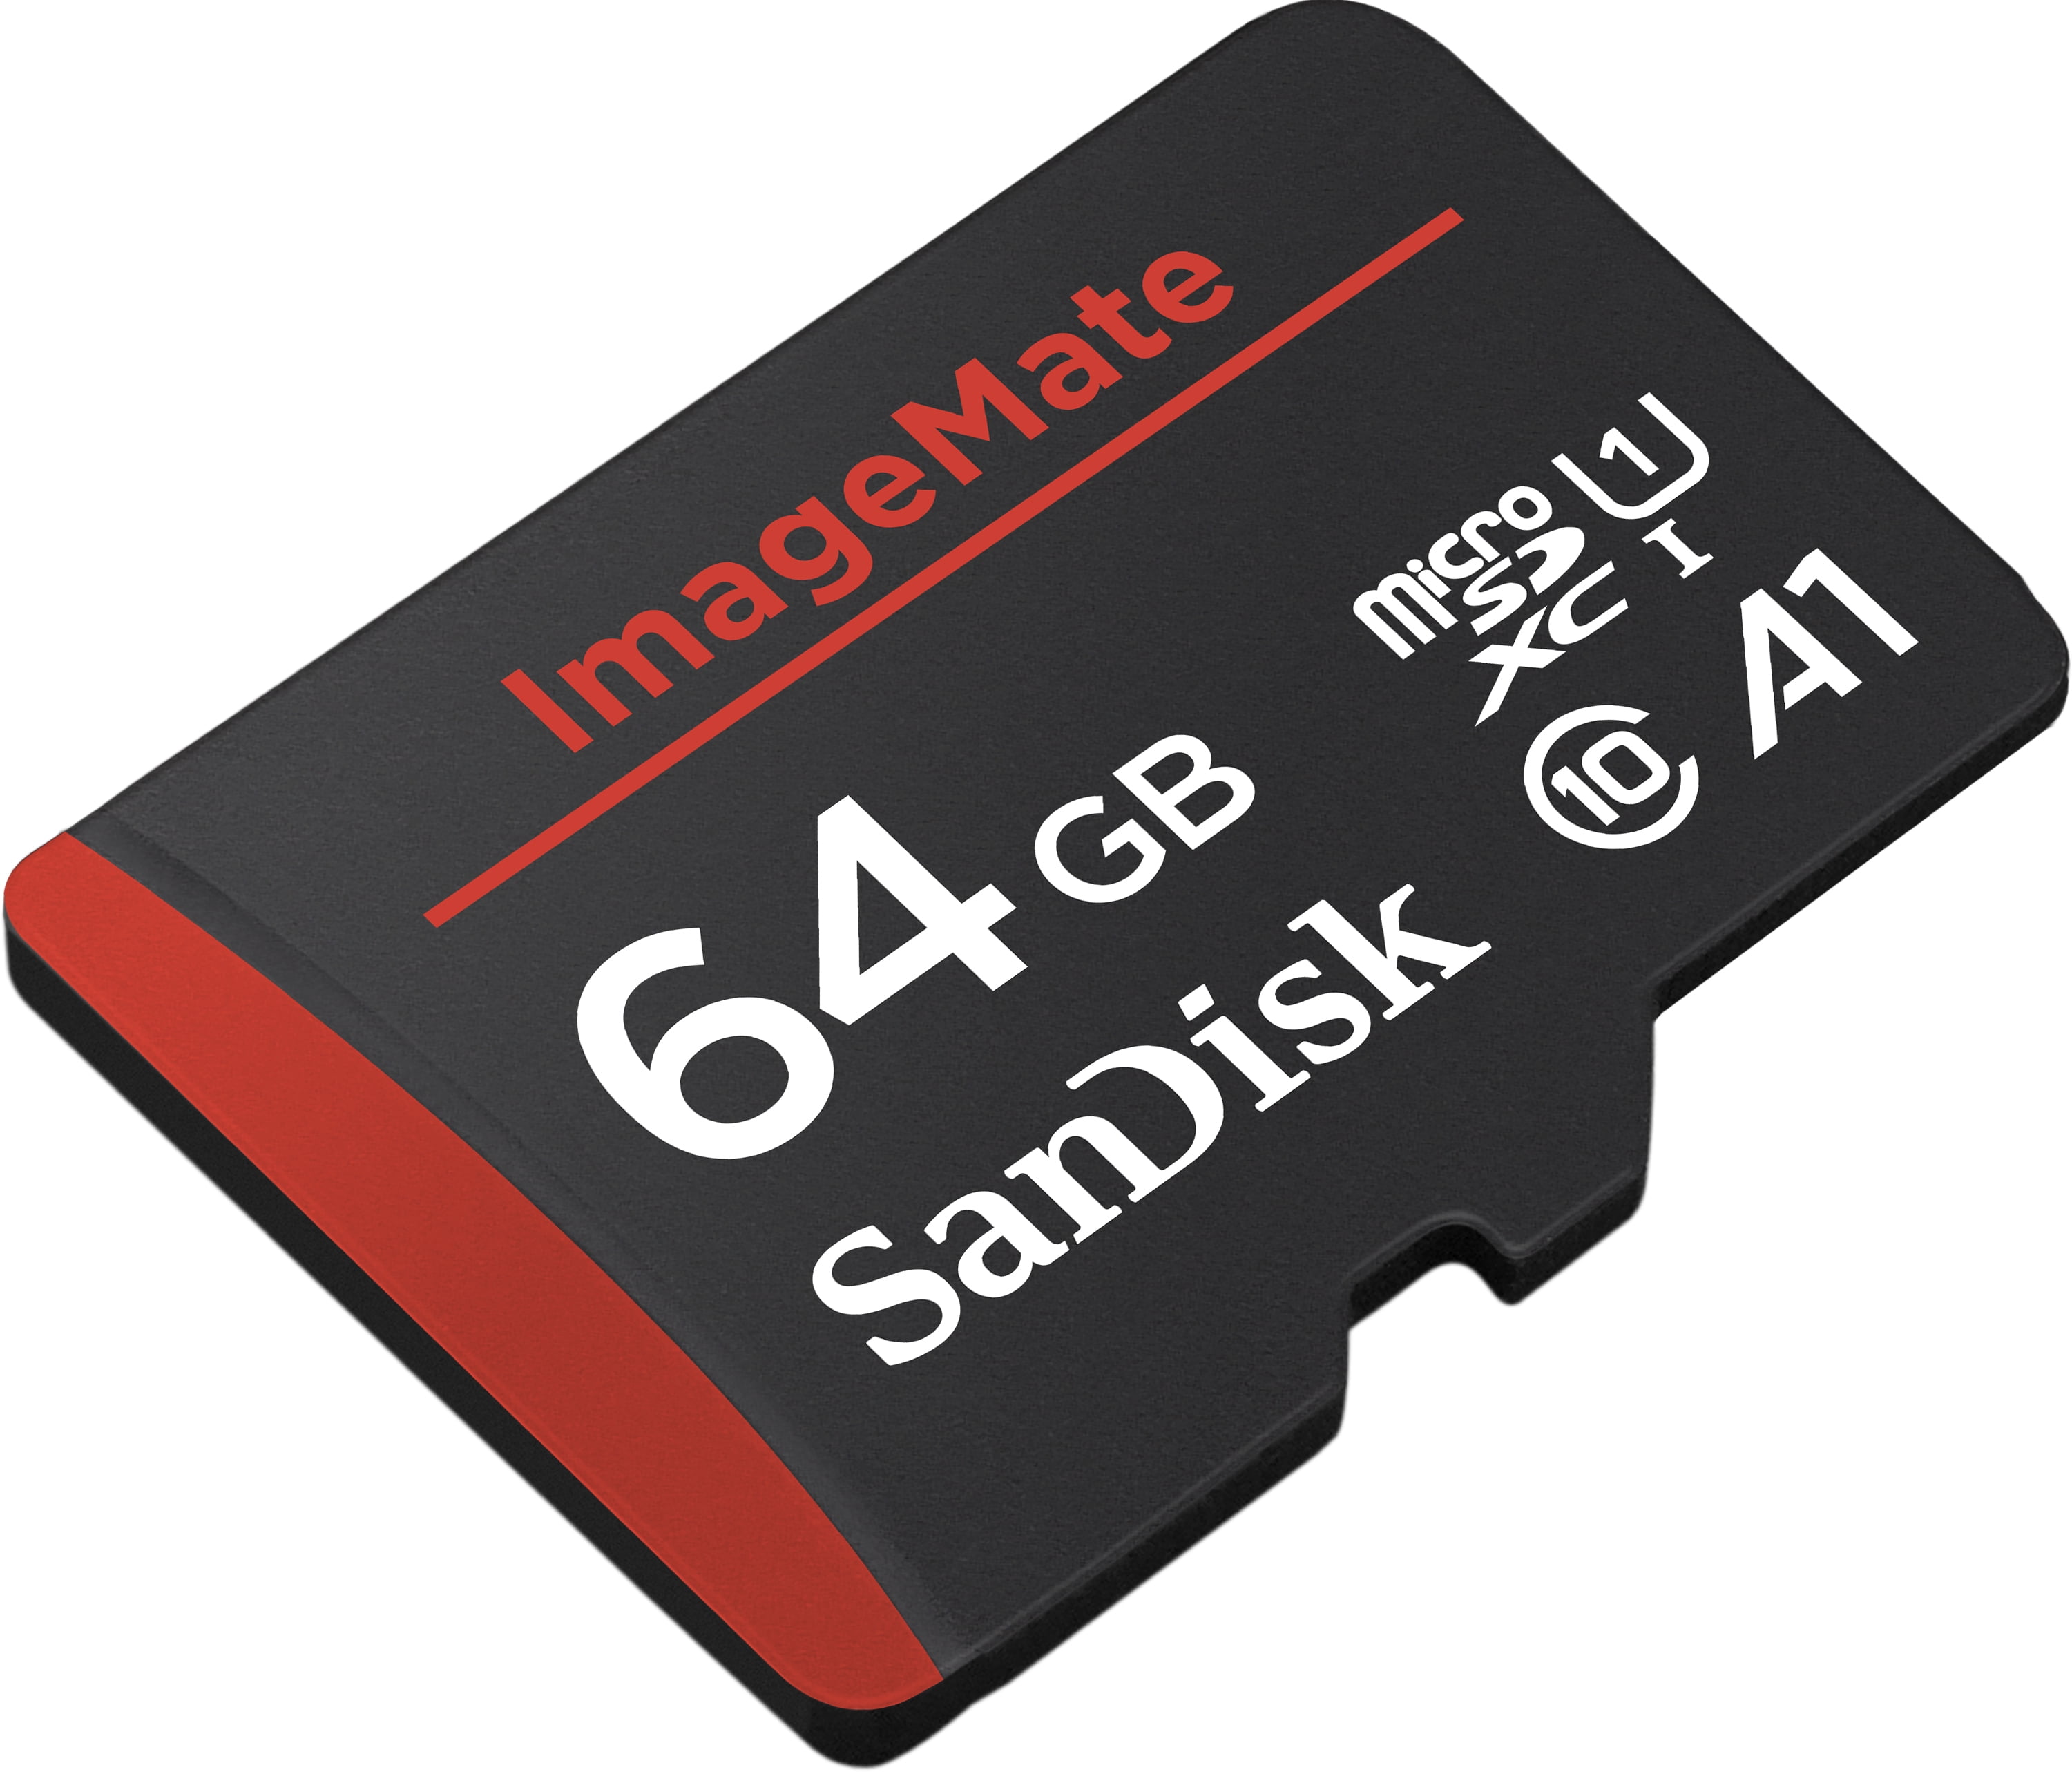 DC4A 64GB Micro SD Card – Carmate USA, Inc.